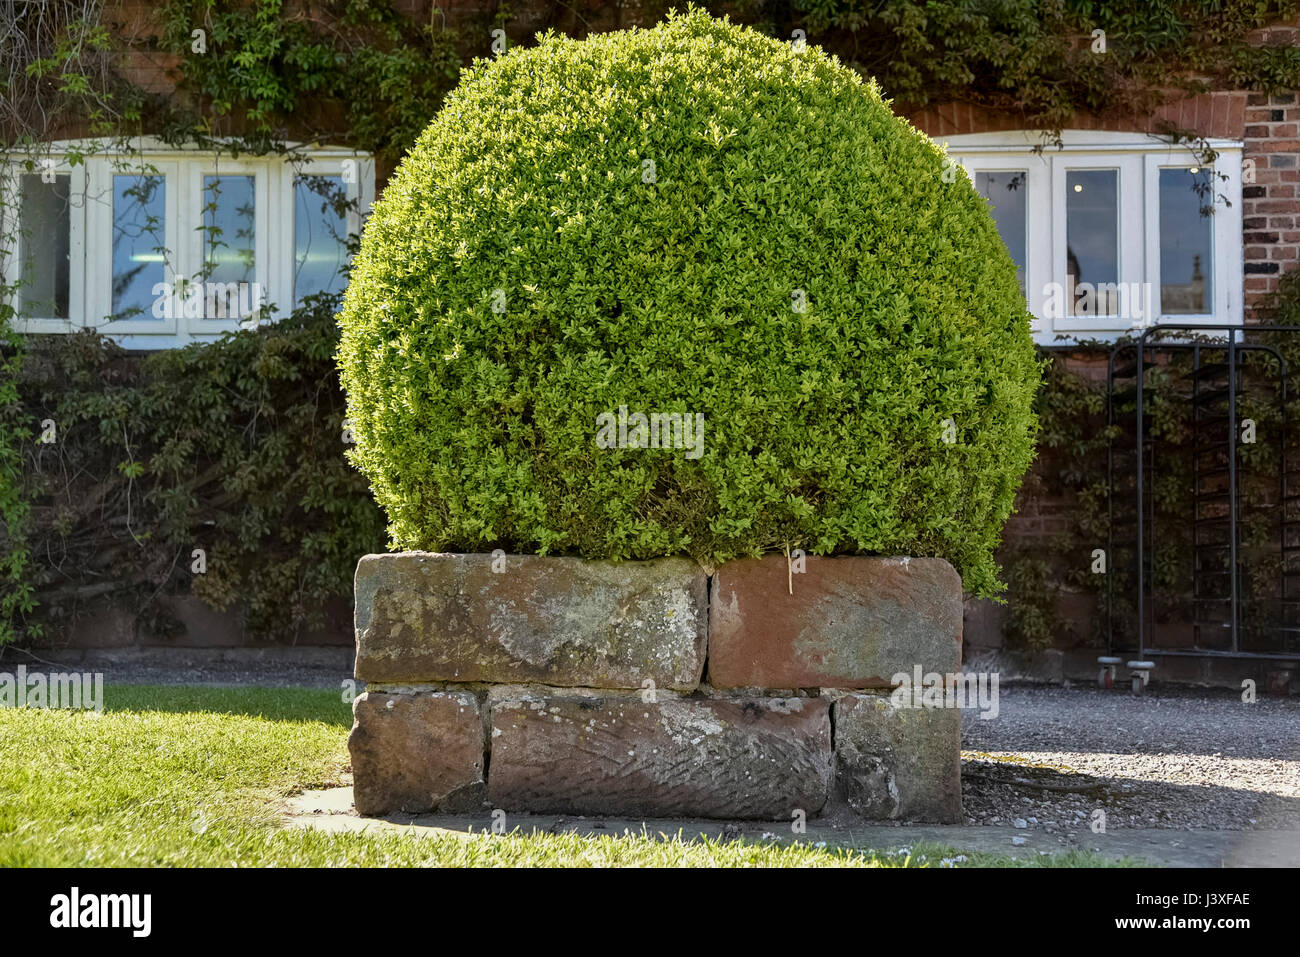 A bush trained into a globe. Stock Photo